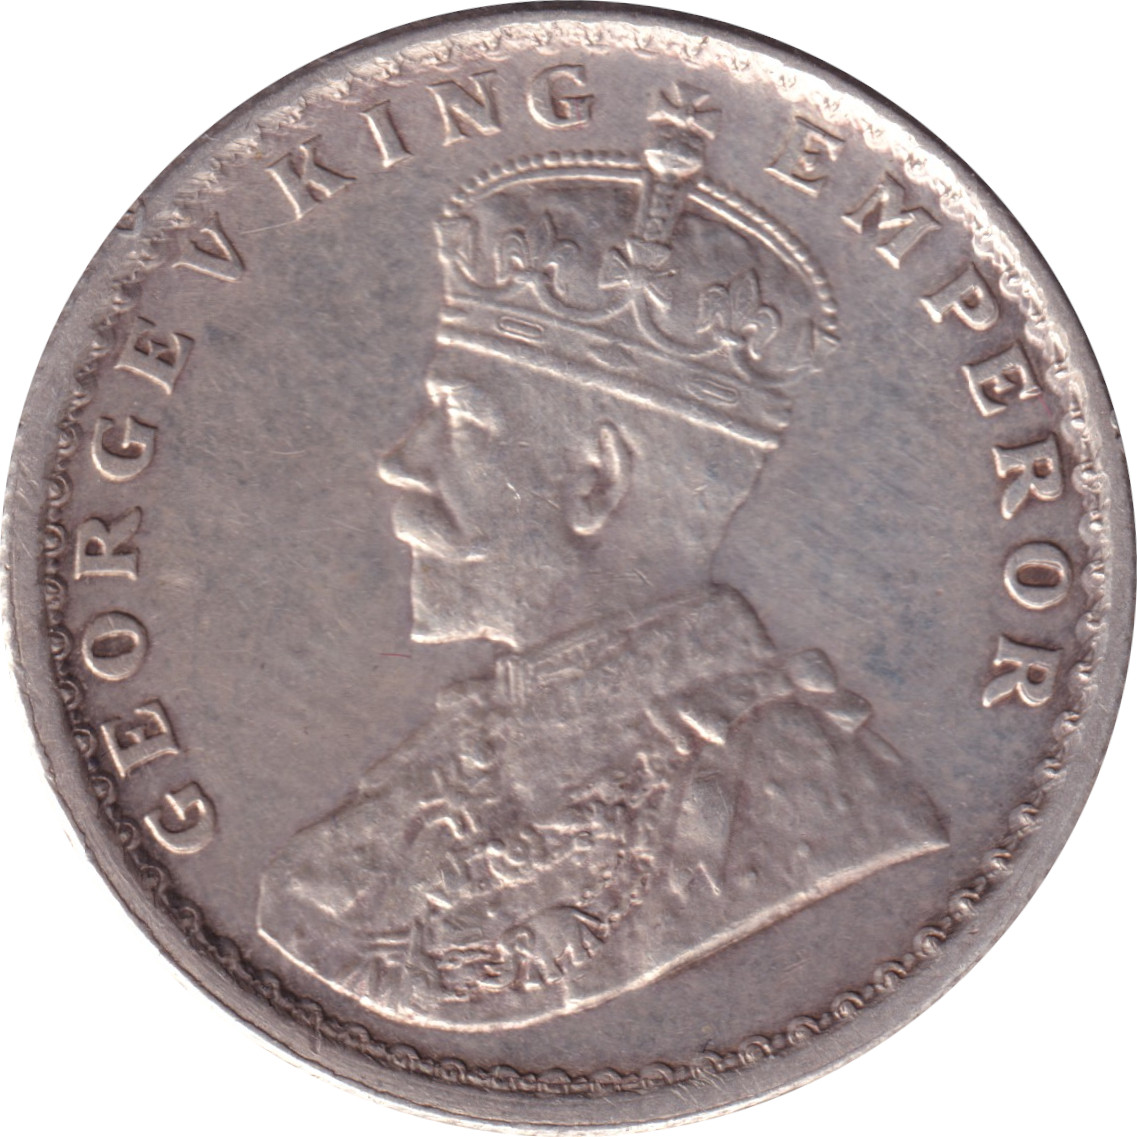 1/2 rupee - George V